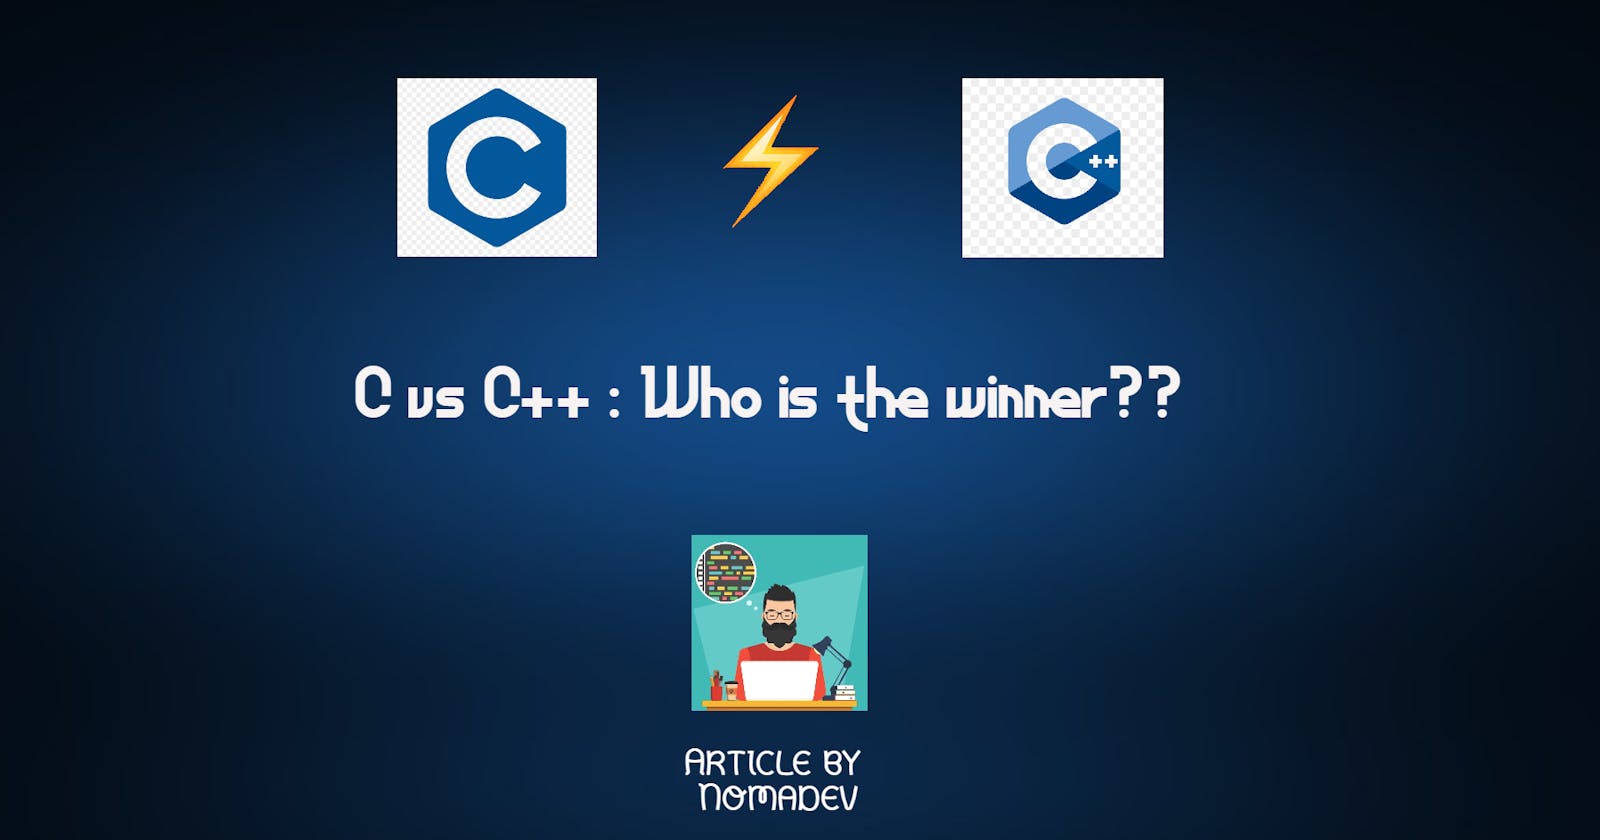 C vs. C++: Who is the winner?